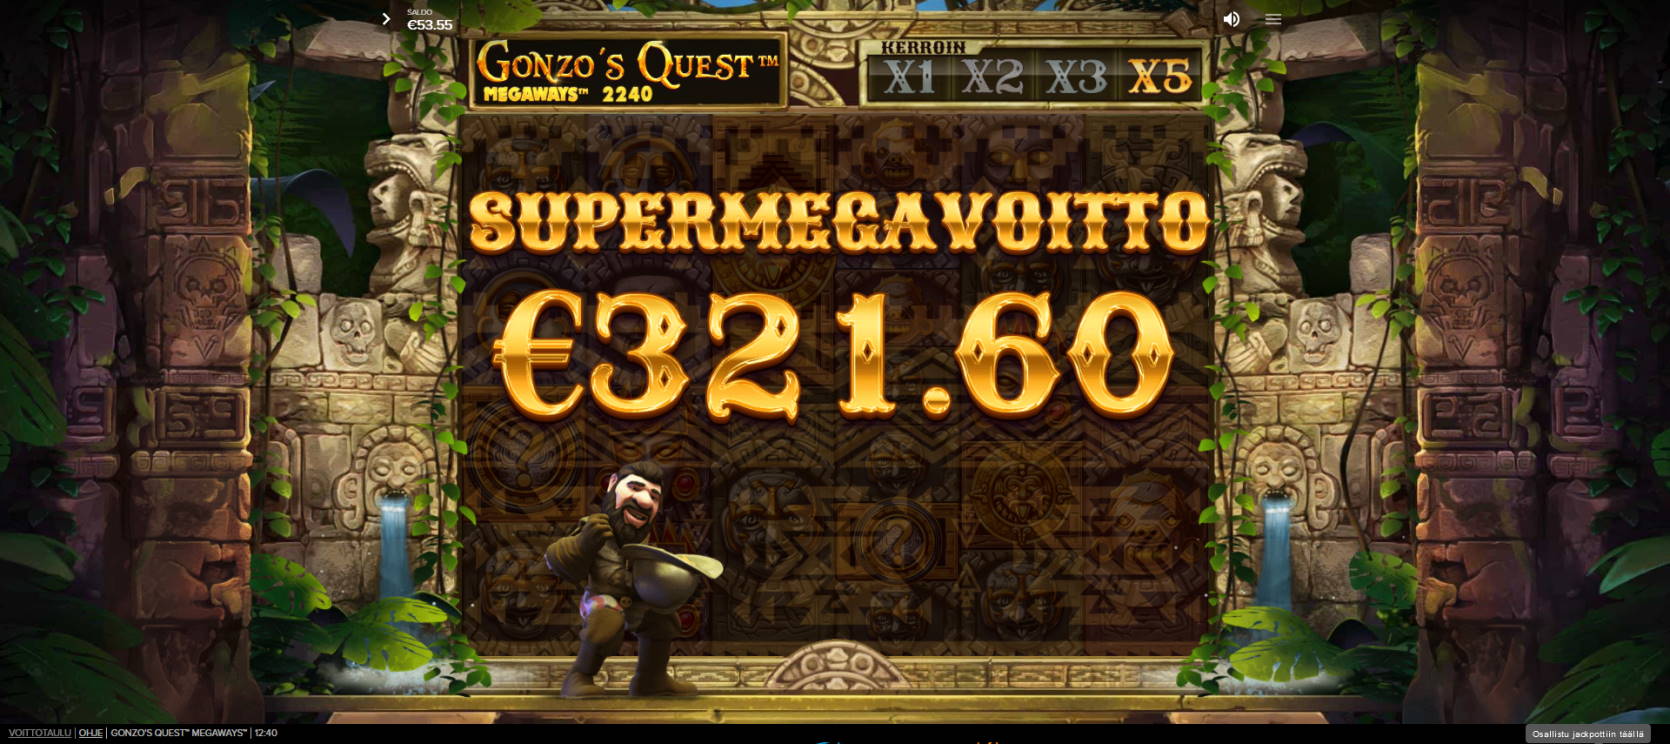 Gonzos Quest Megaways Casino win picture by Kari Grandi 24.11.2021 321.60e 322X